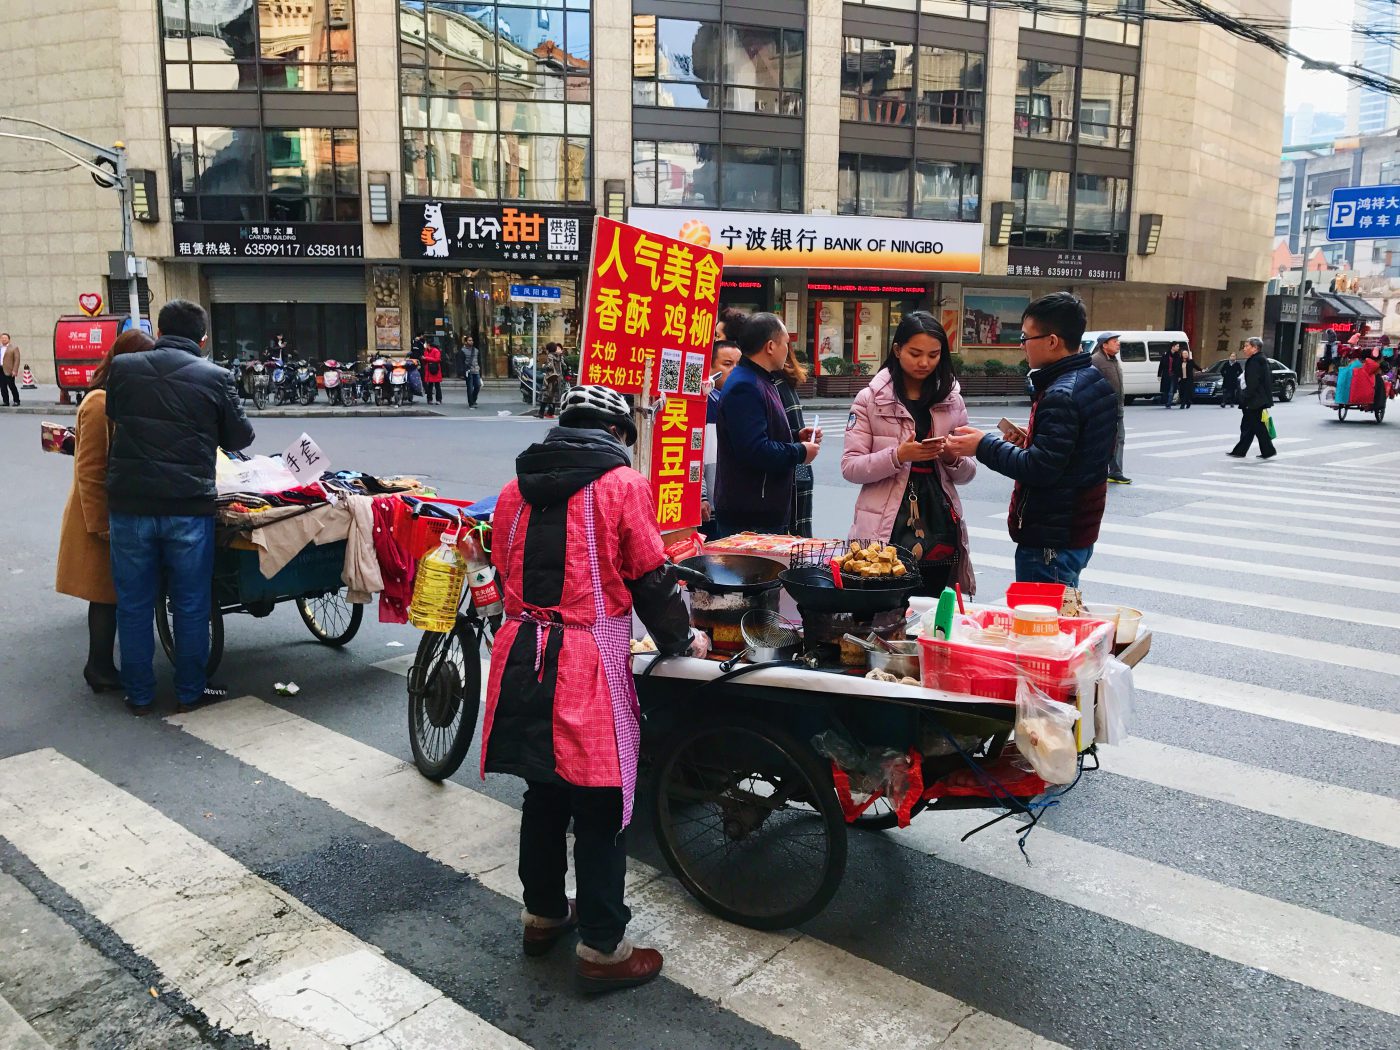 More street vendor at Huanghe